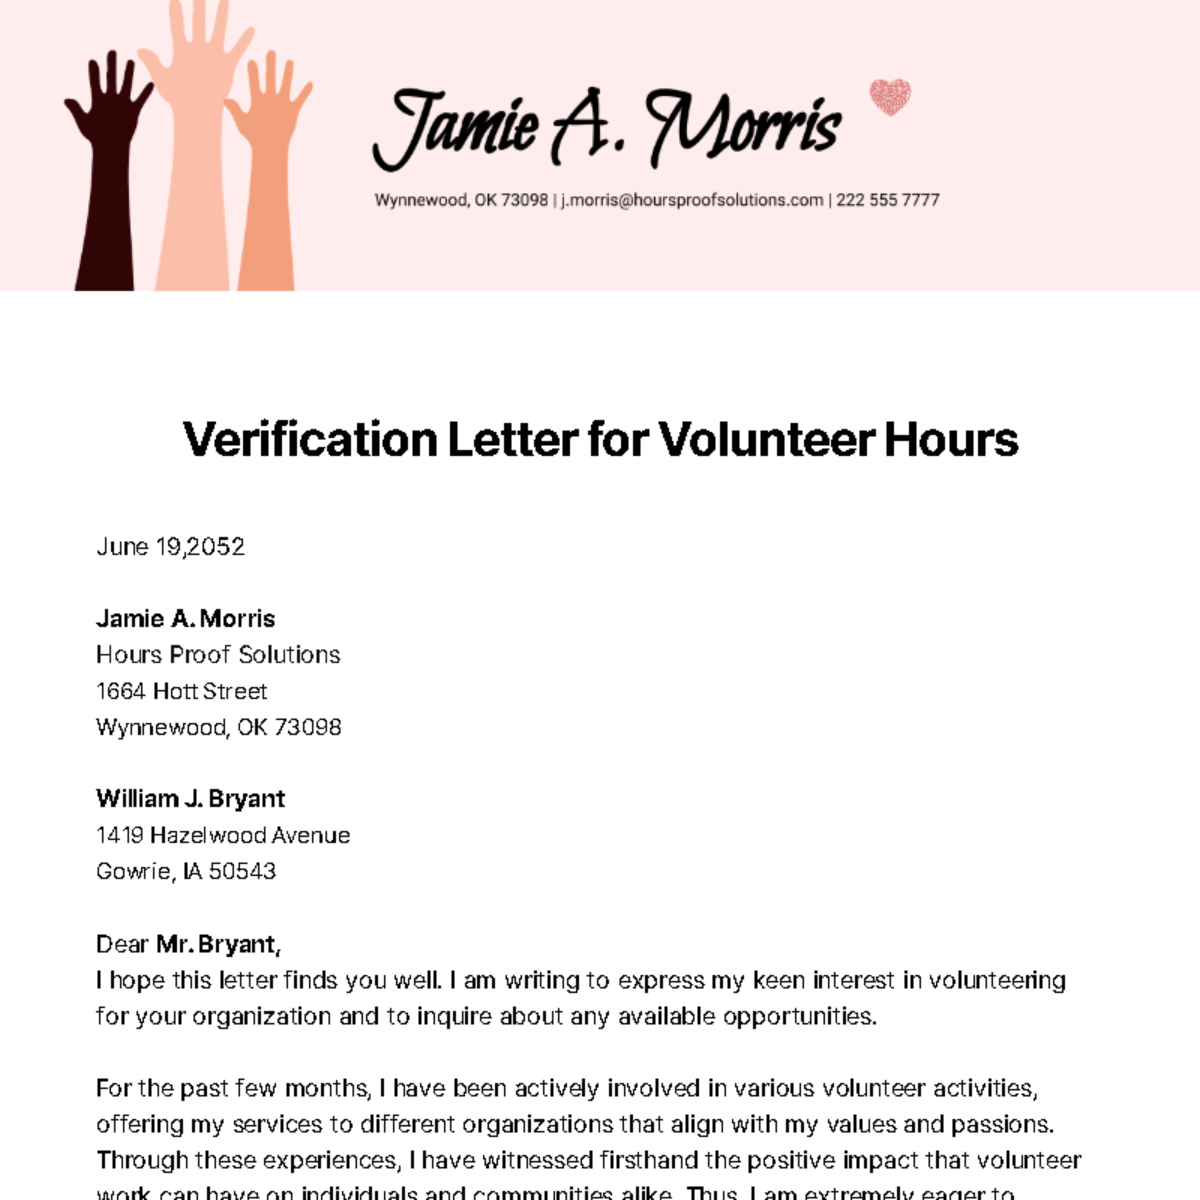 Verification Letter for Volunteer Hours Template